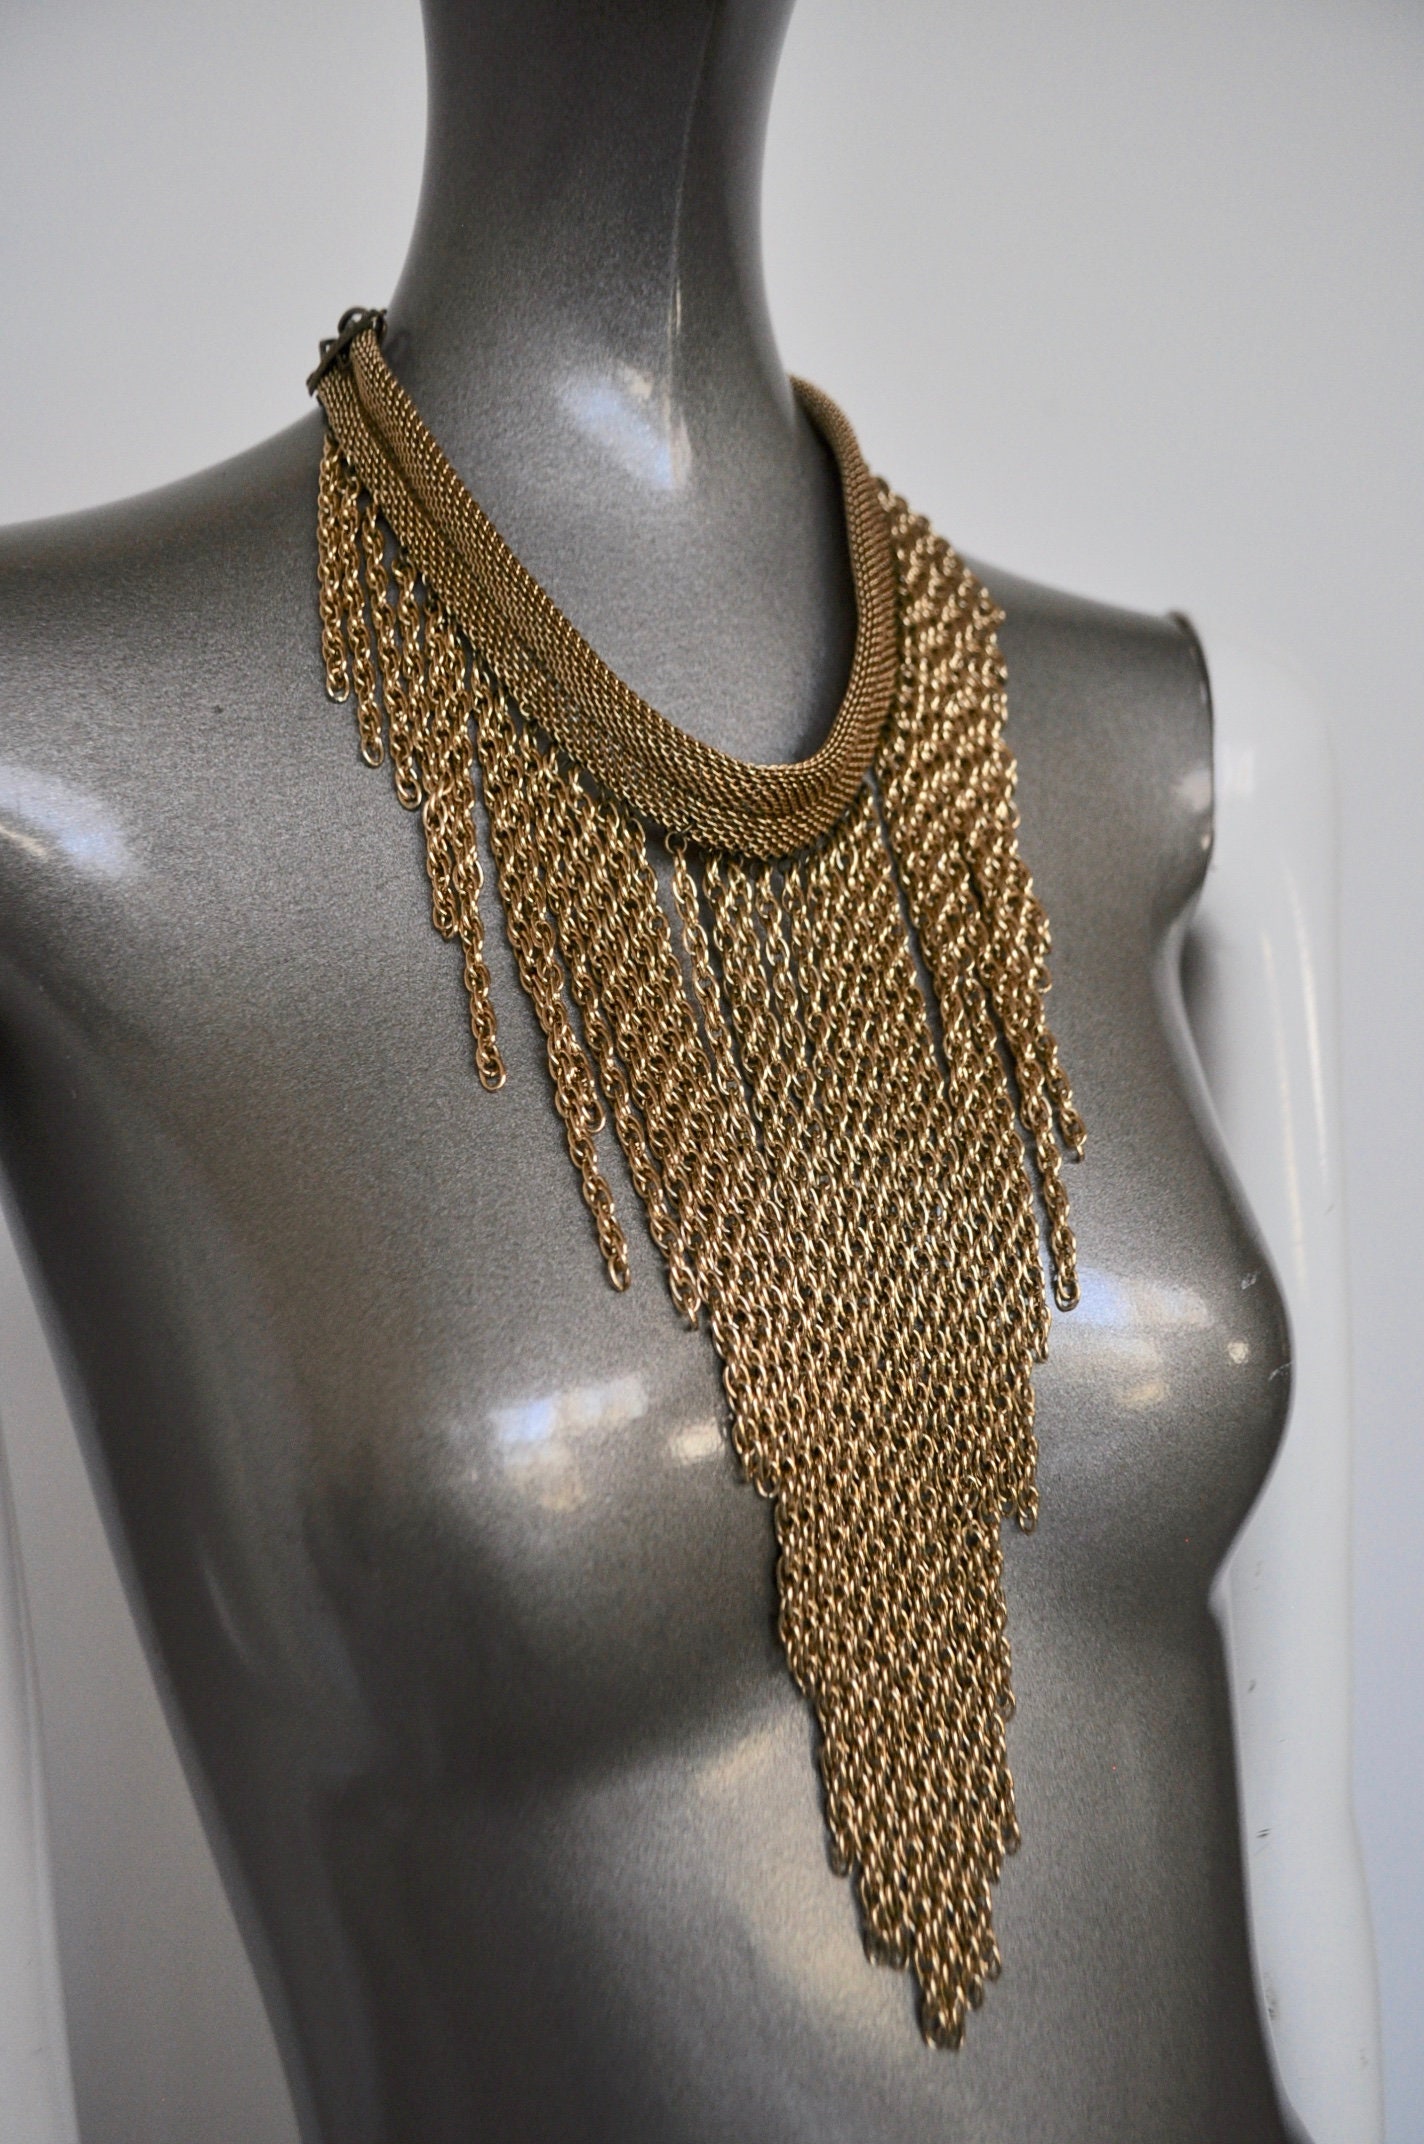 Multistrand opulent necklace 70s | Etsy